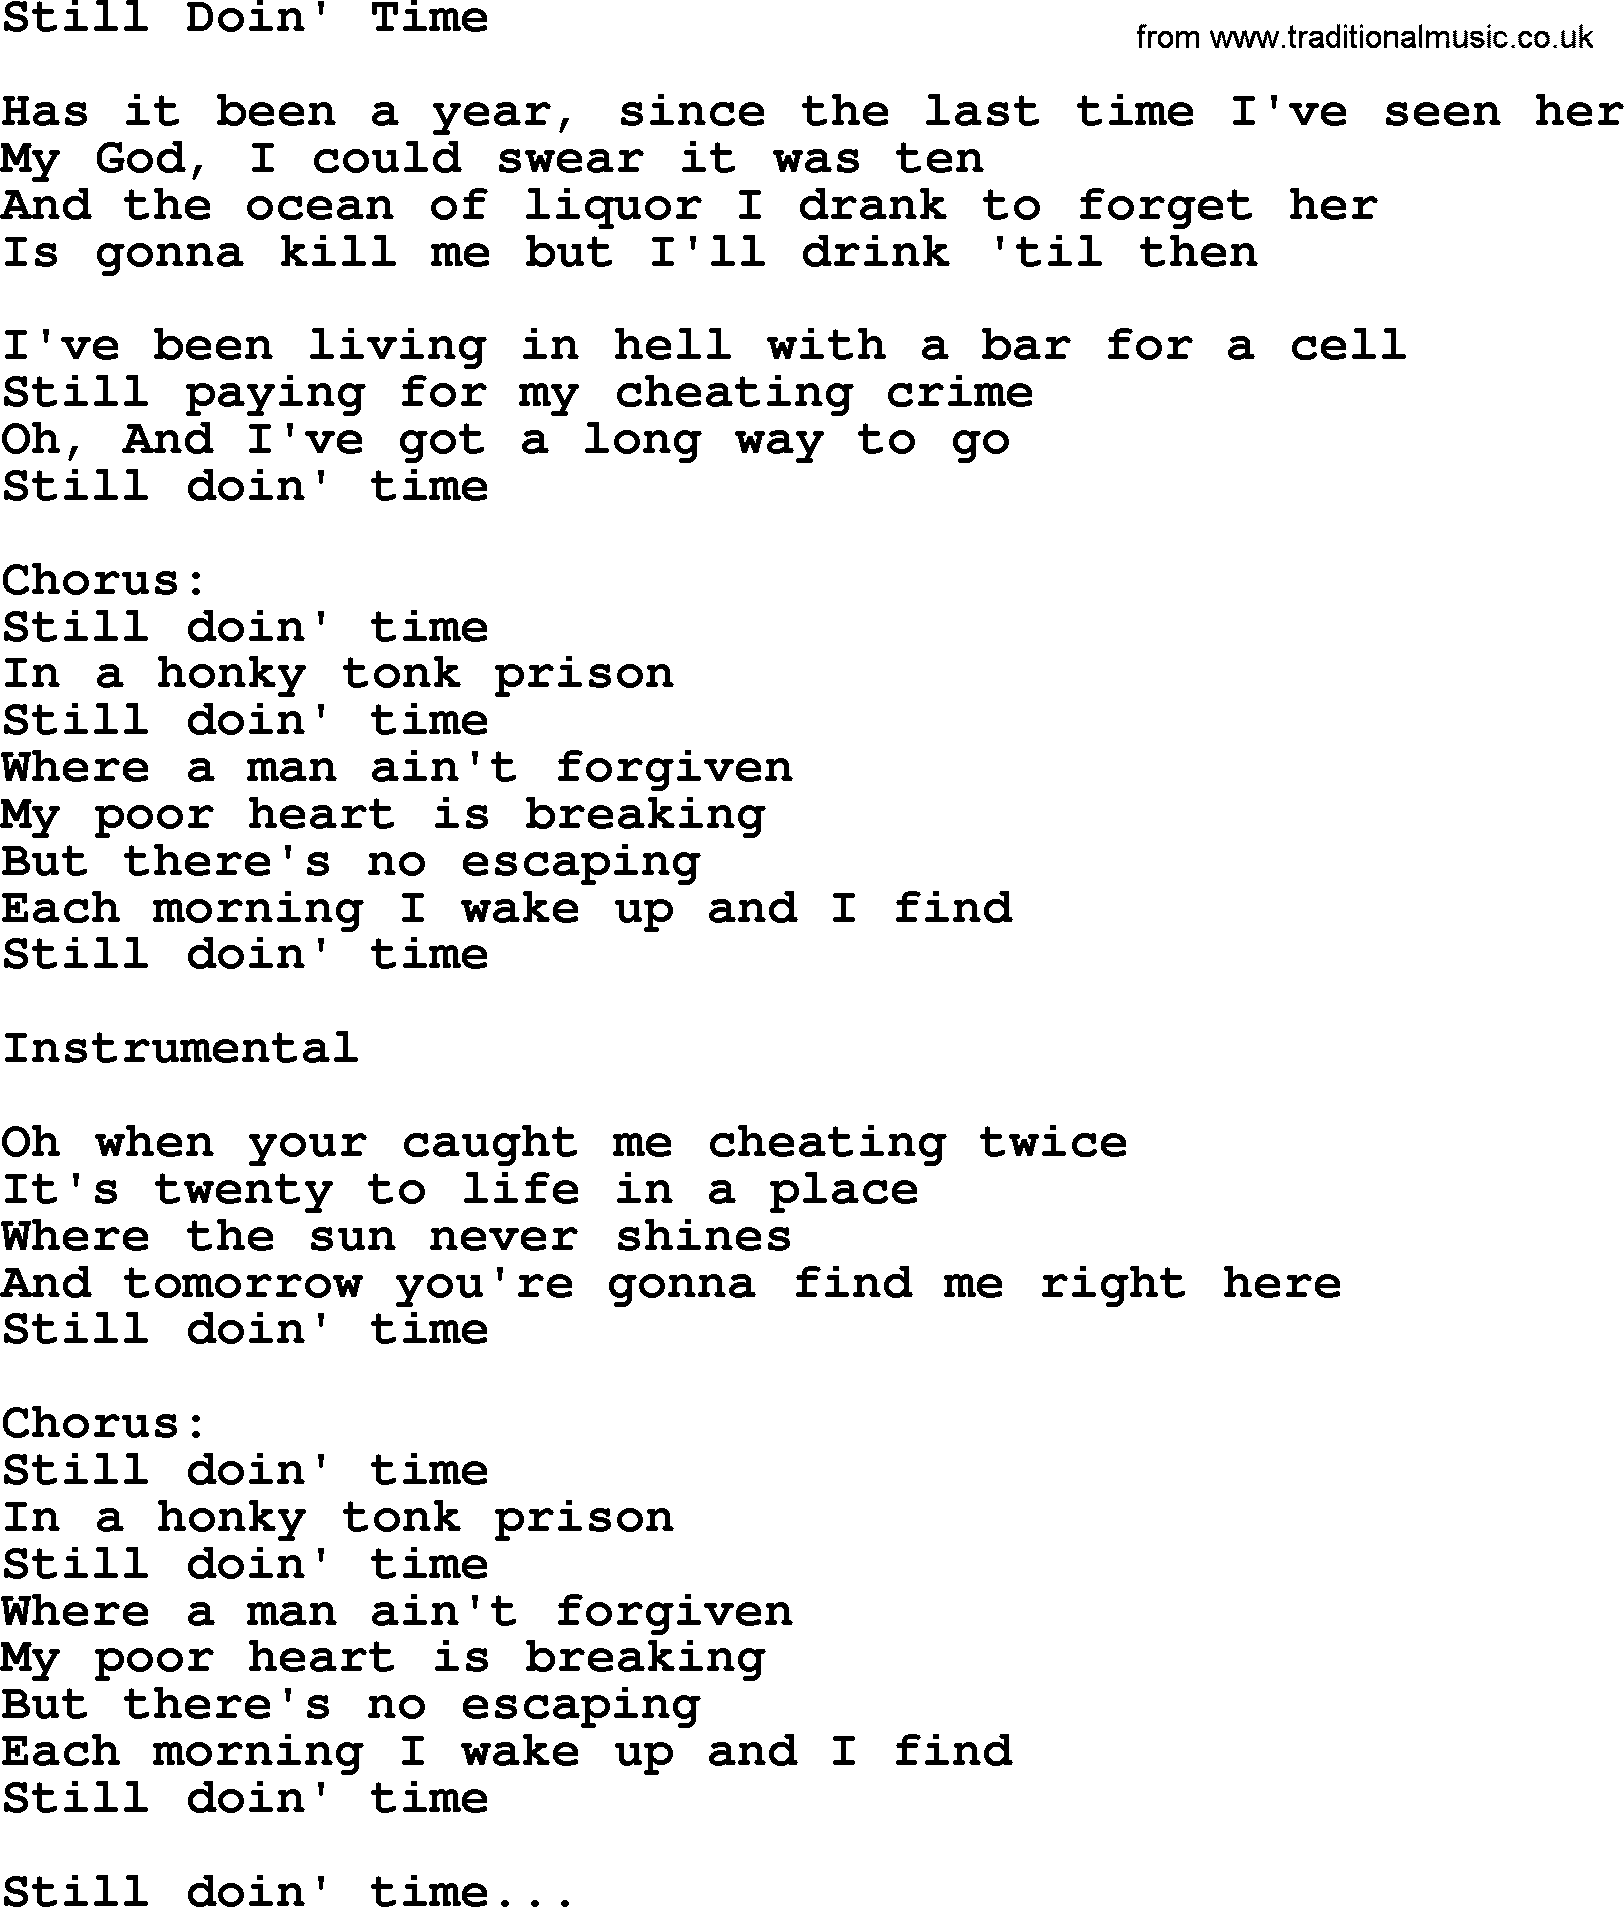 George Jones song: Still Doin' Time, lyrics